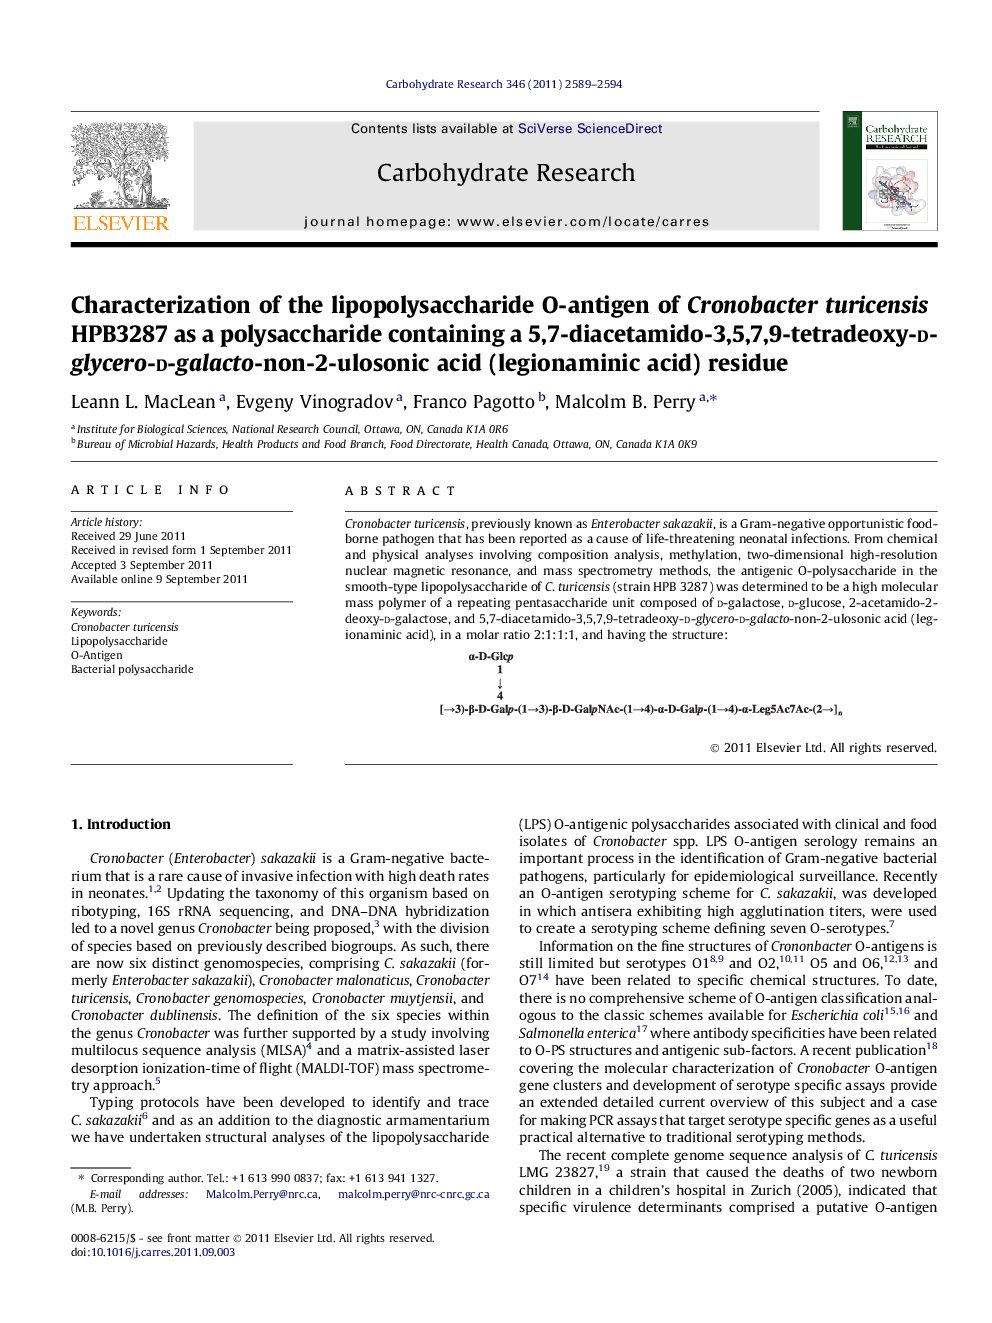 Characterization of the lipopolysaccharide O-antigen of Cronobacter turicensis HPB3287 as a polysaccharide containing a 5,7-diacetamido-3,5,7,9-tetradeoxy-d-glycero-d-galacto-non-2-ulosonic acid (legionaminic acid) residue